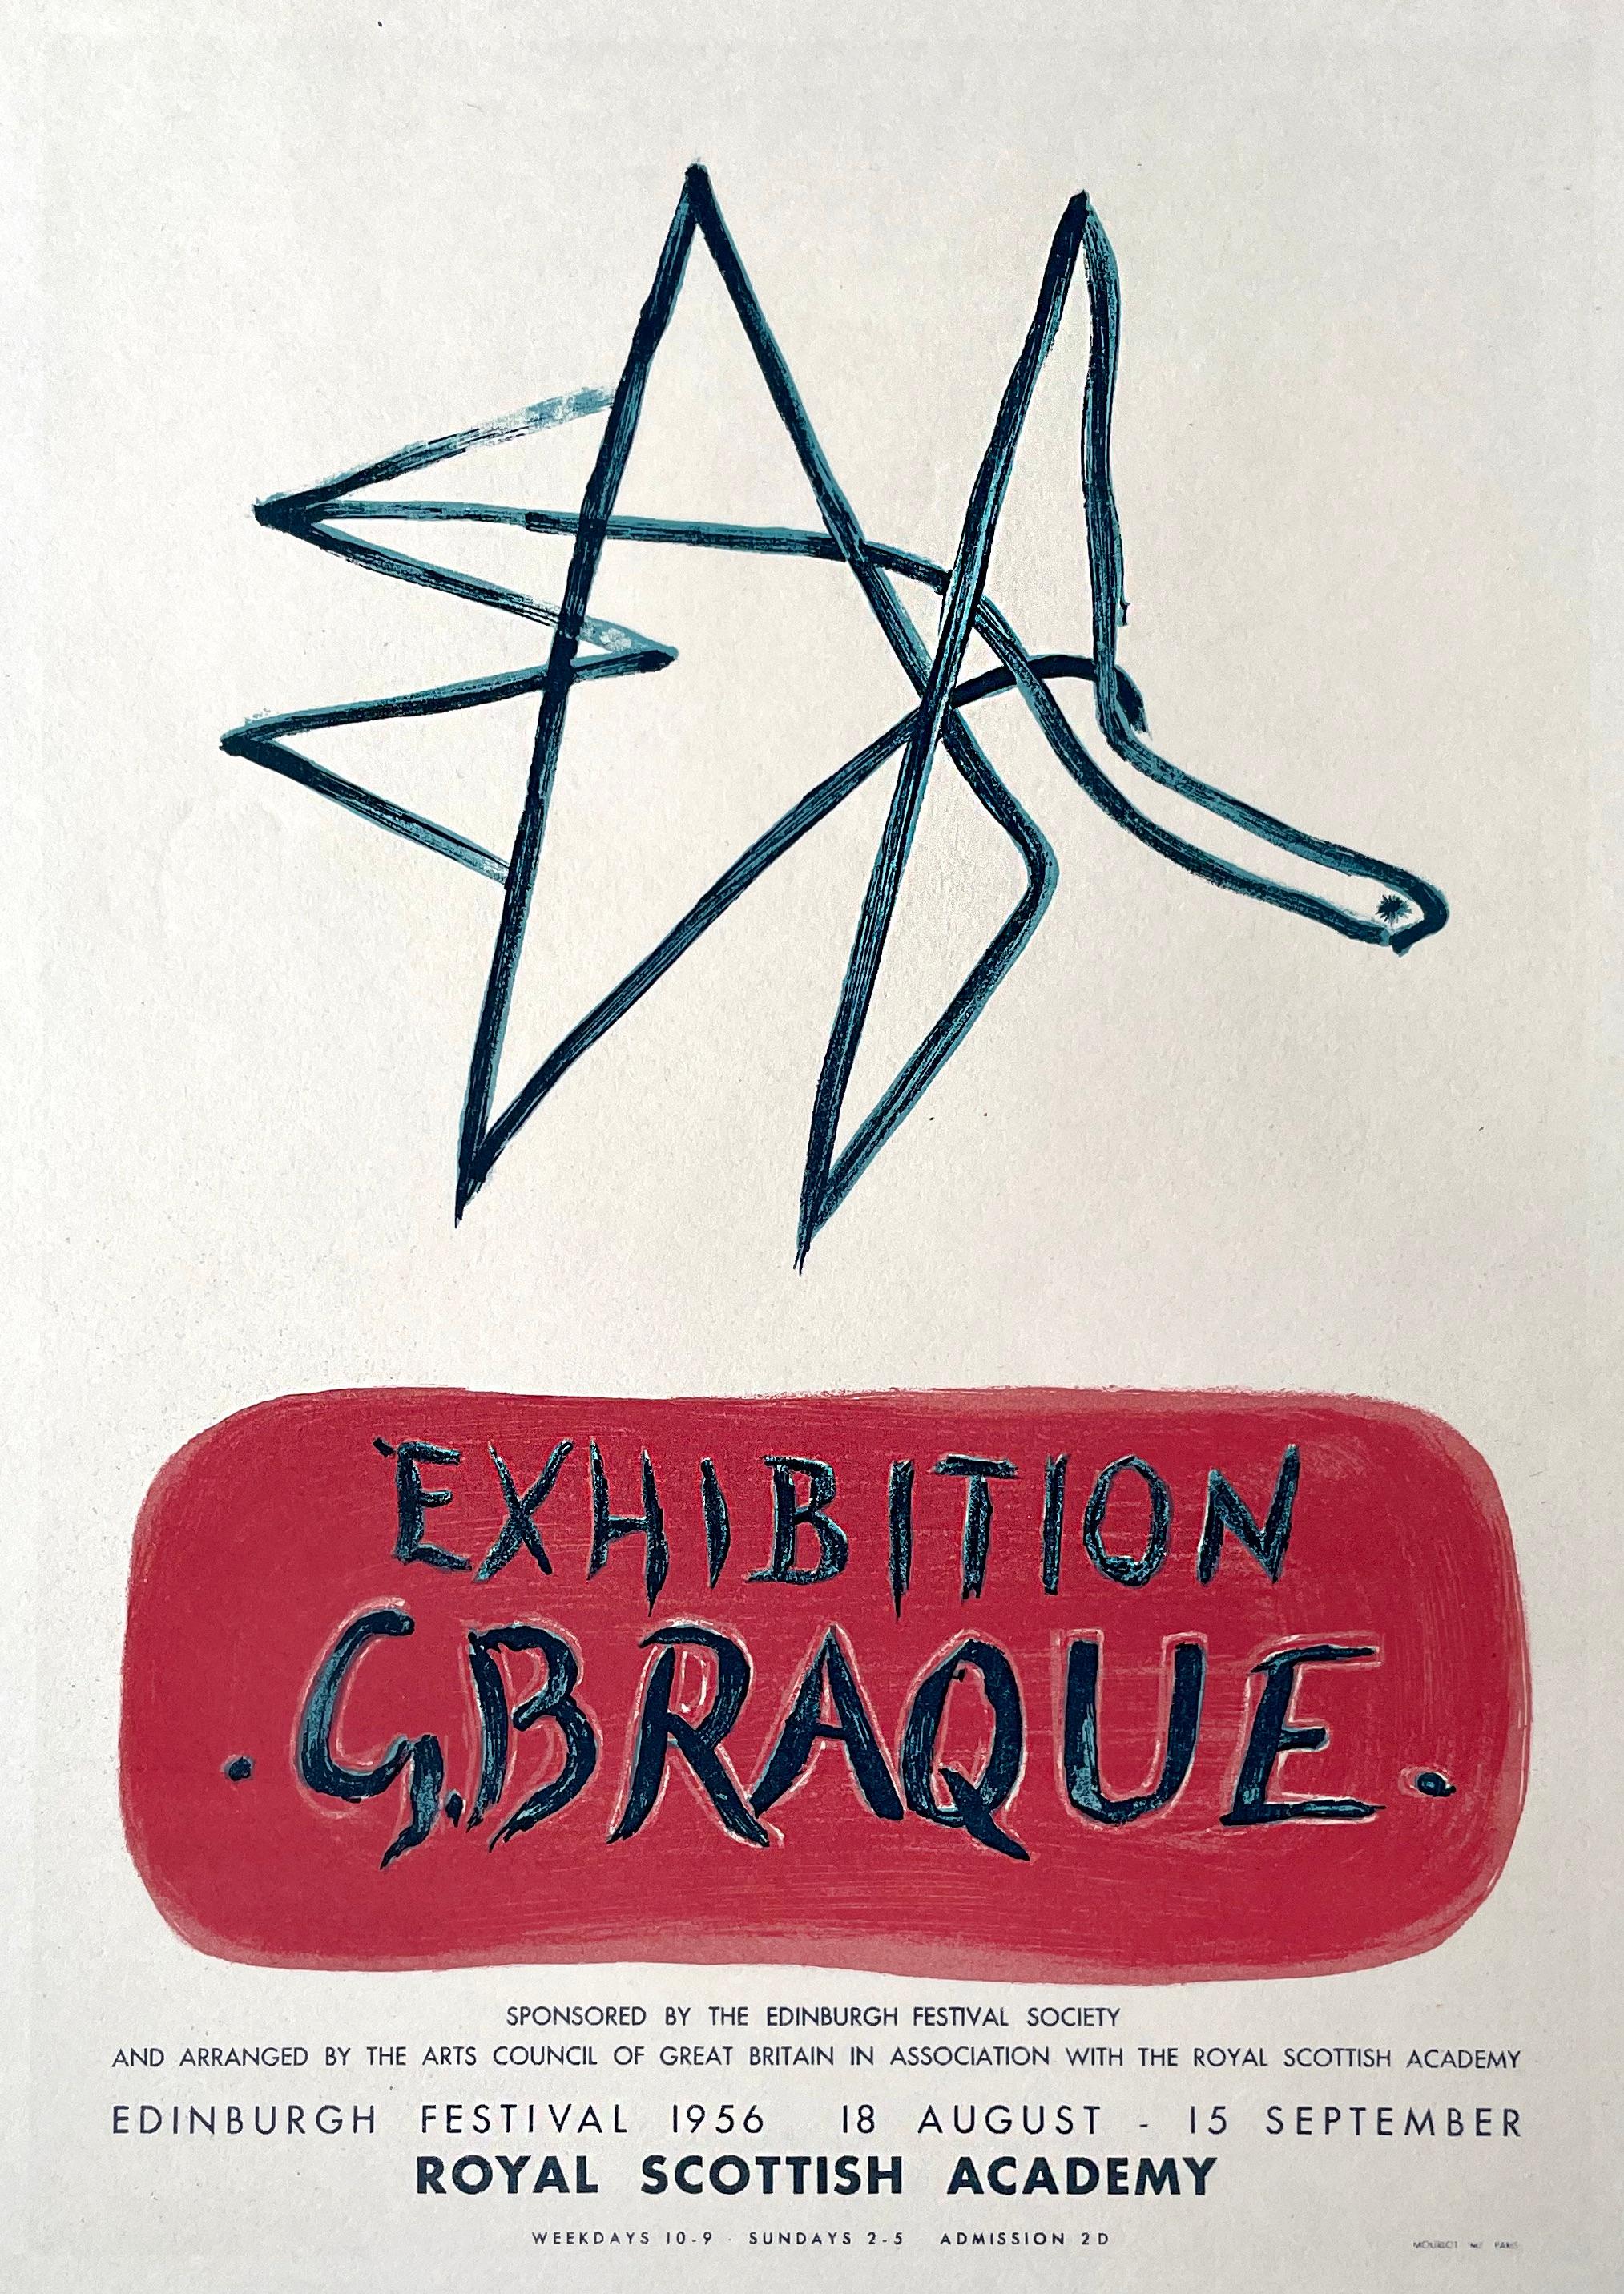 Cubist Exhibition Poster by Georges Braque, Modernist Mourlot Lithograph, 1959